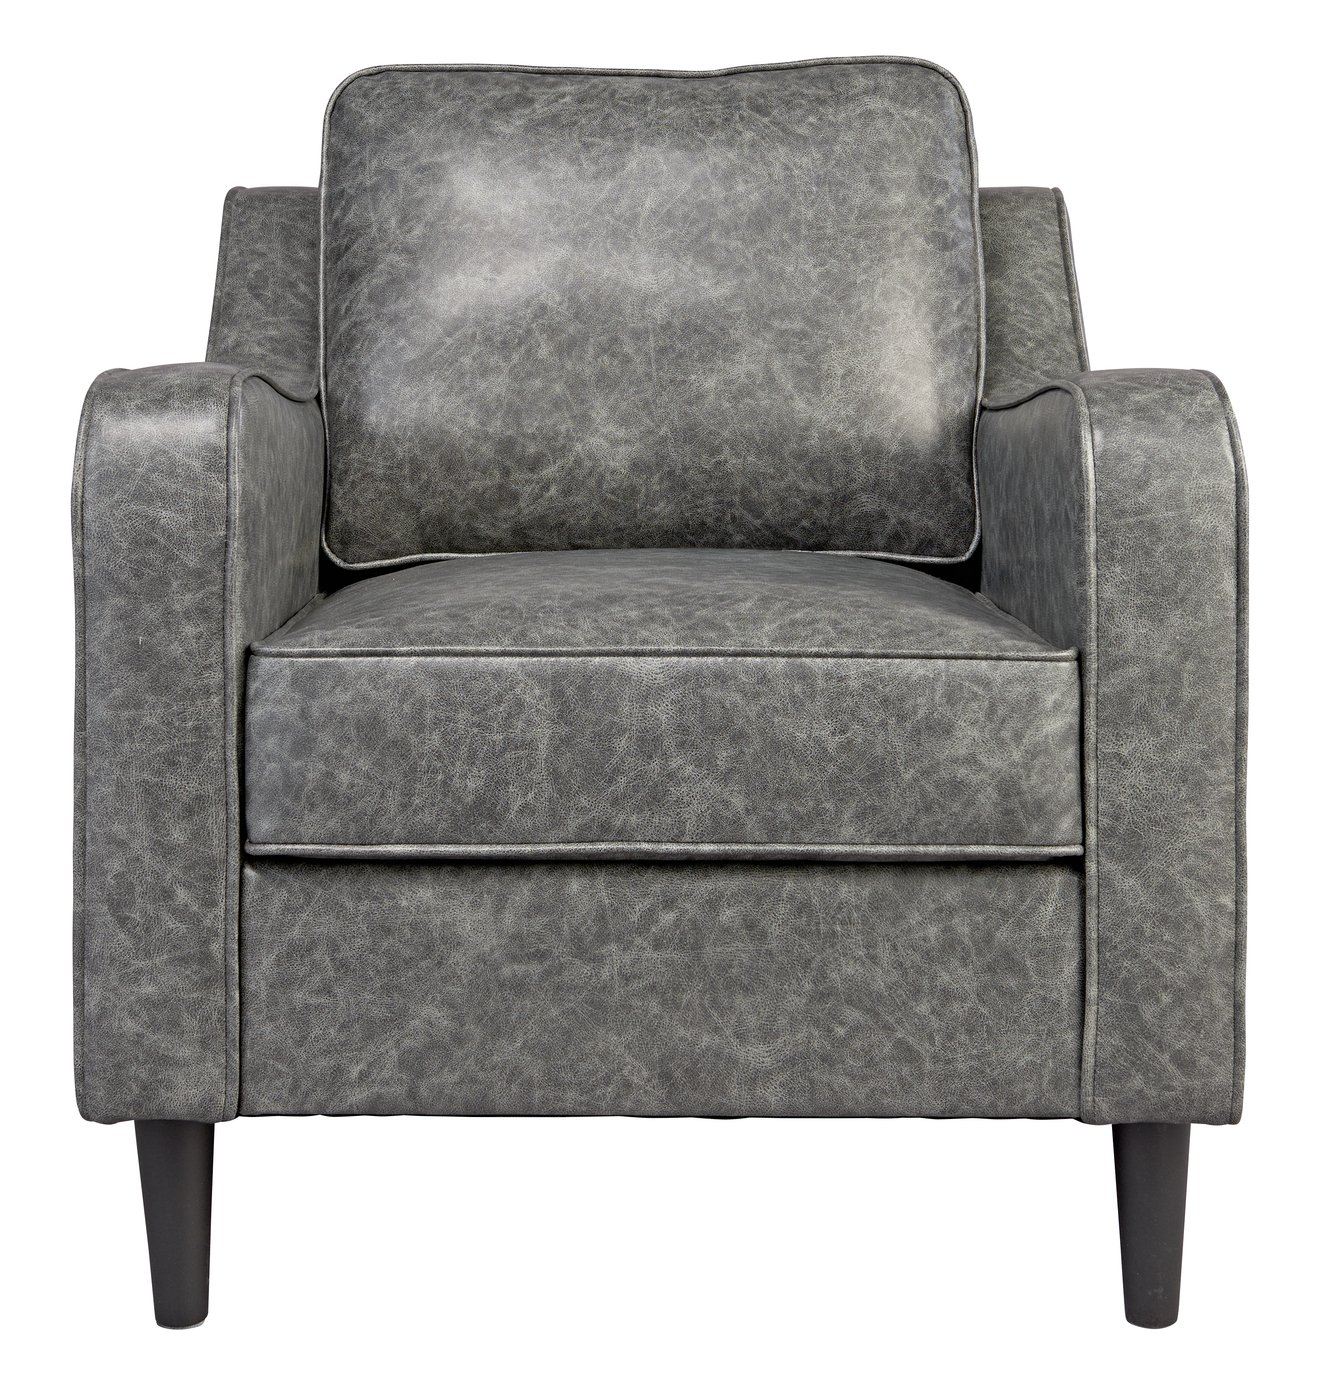 Argos Home Dorian Leather Effect Chair - Grey